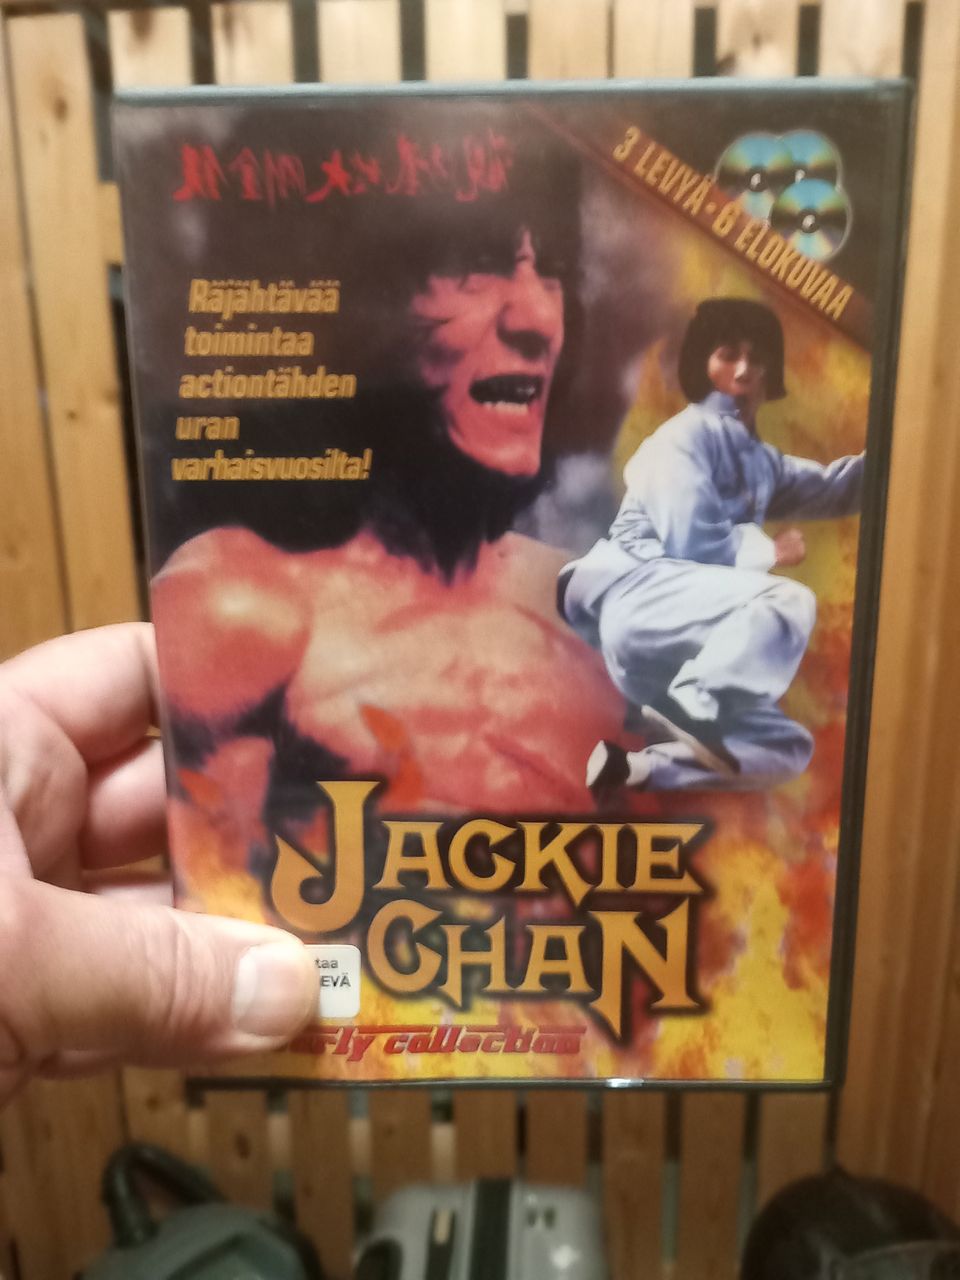 Jackie Chan Dvd boxi, 6-elokuvaa.